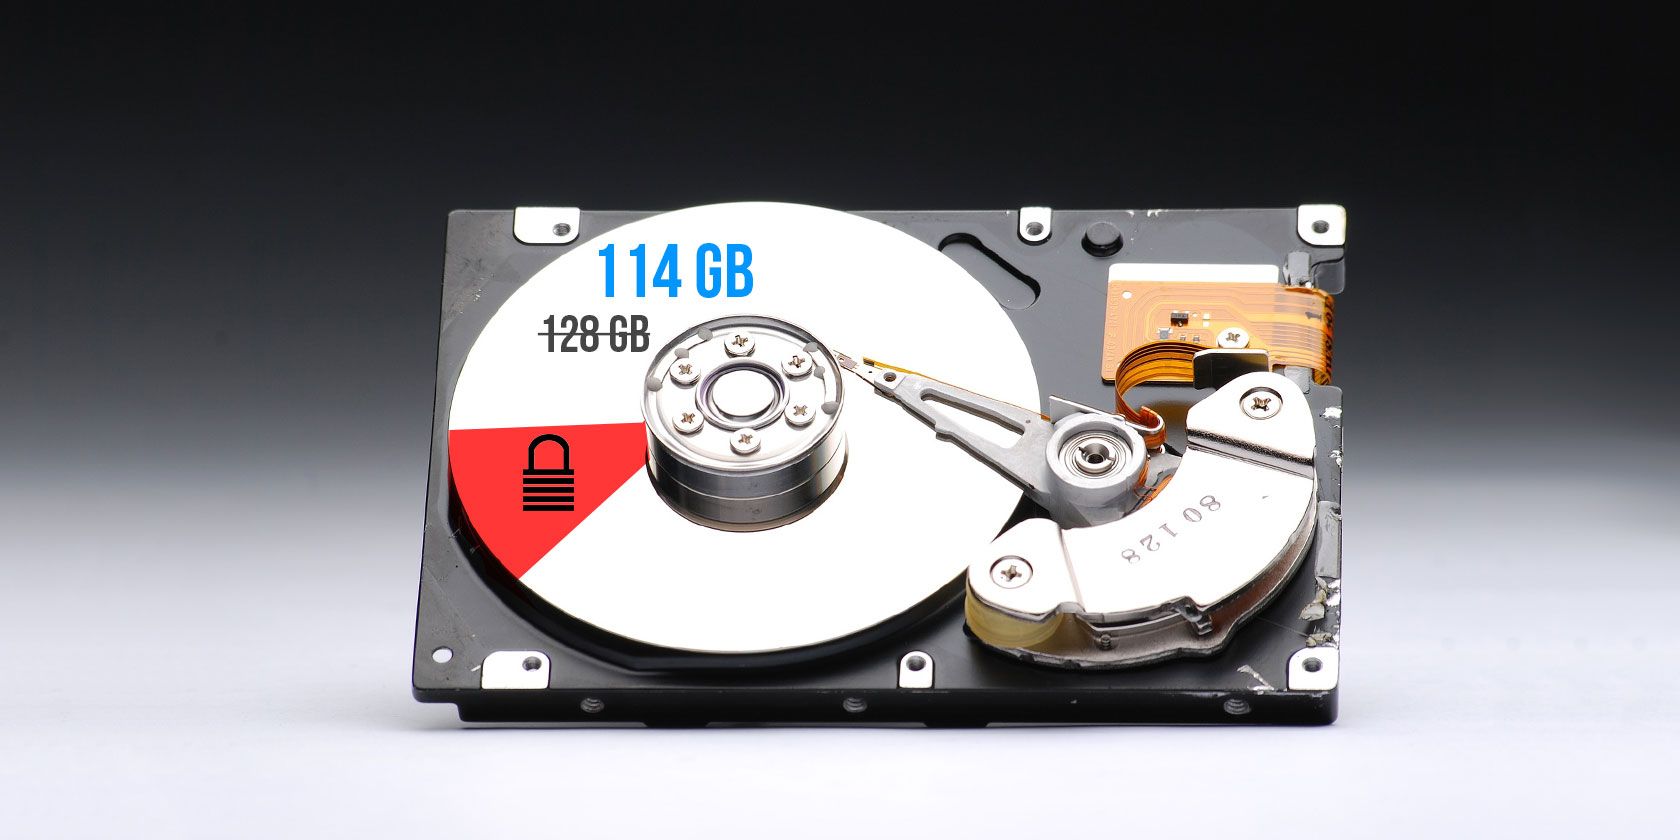 show hard drive on desktop